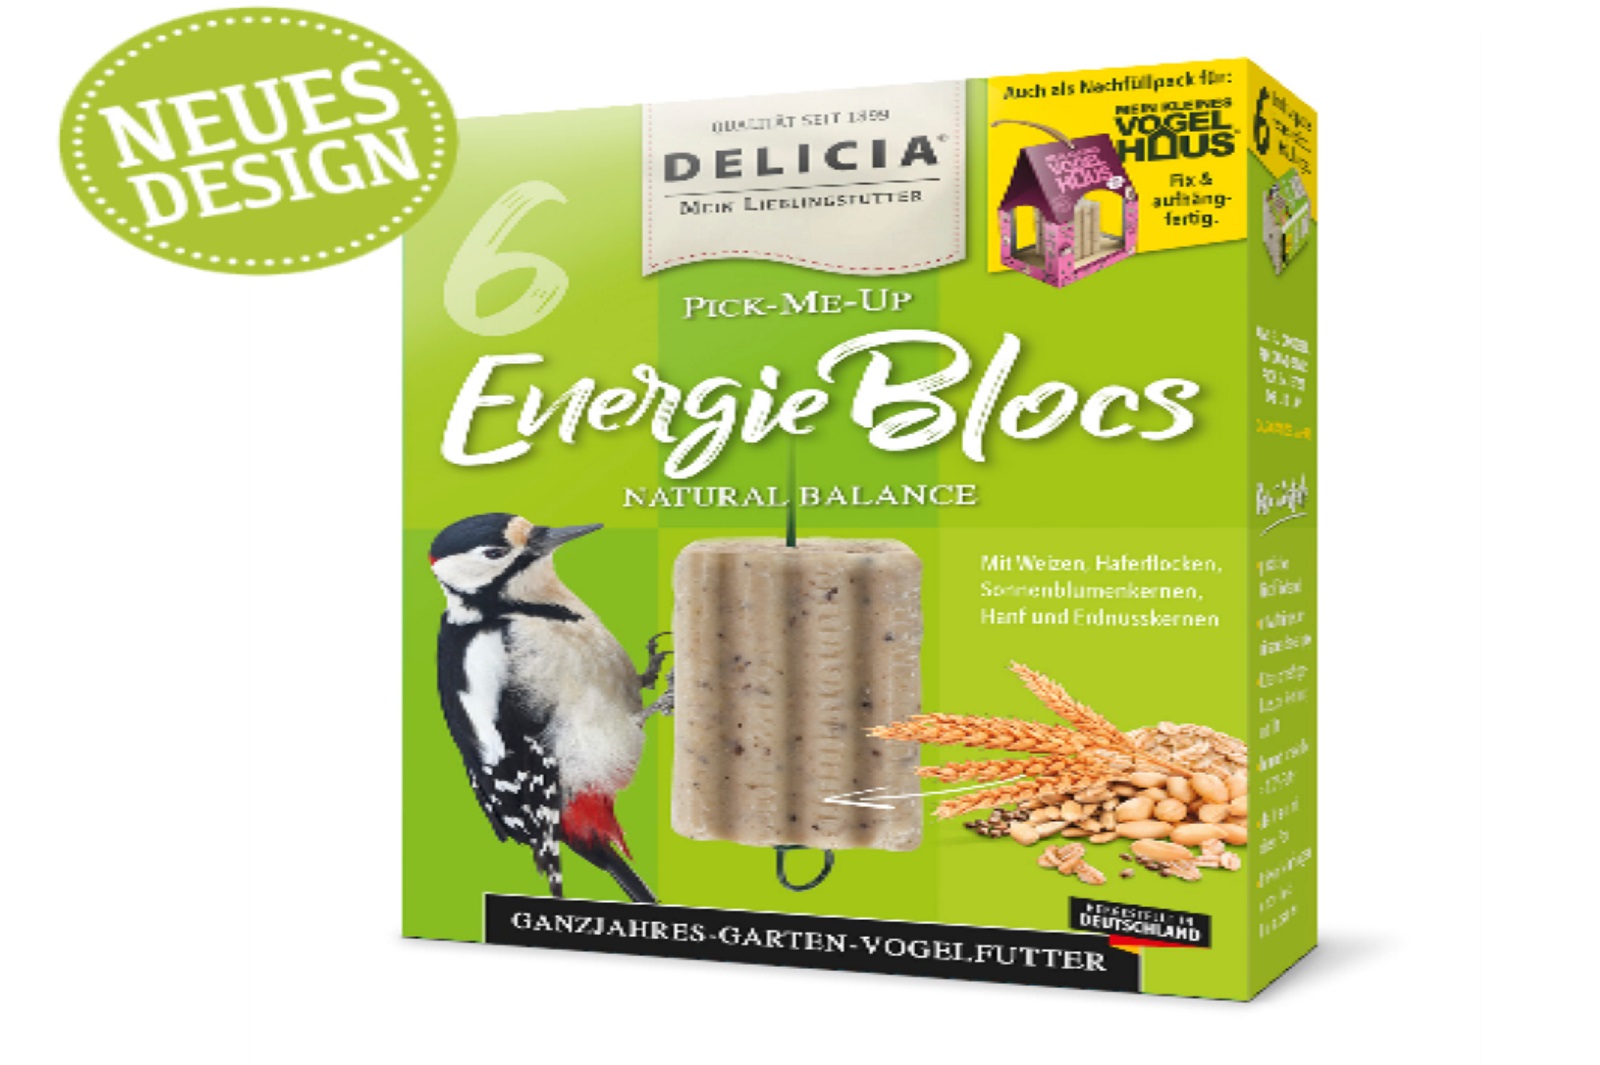 Delicia Energie Blocs Pick-me-up mit Aufhänger Vogelfutter 6 Stck